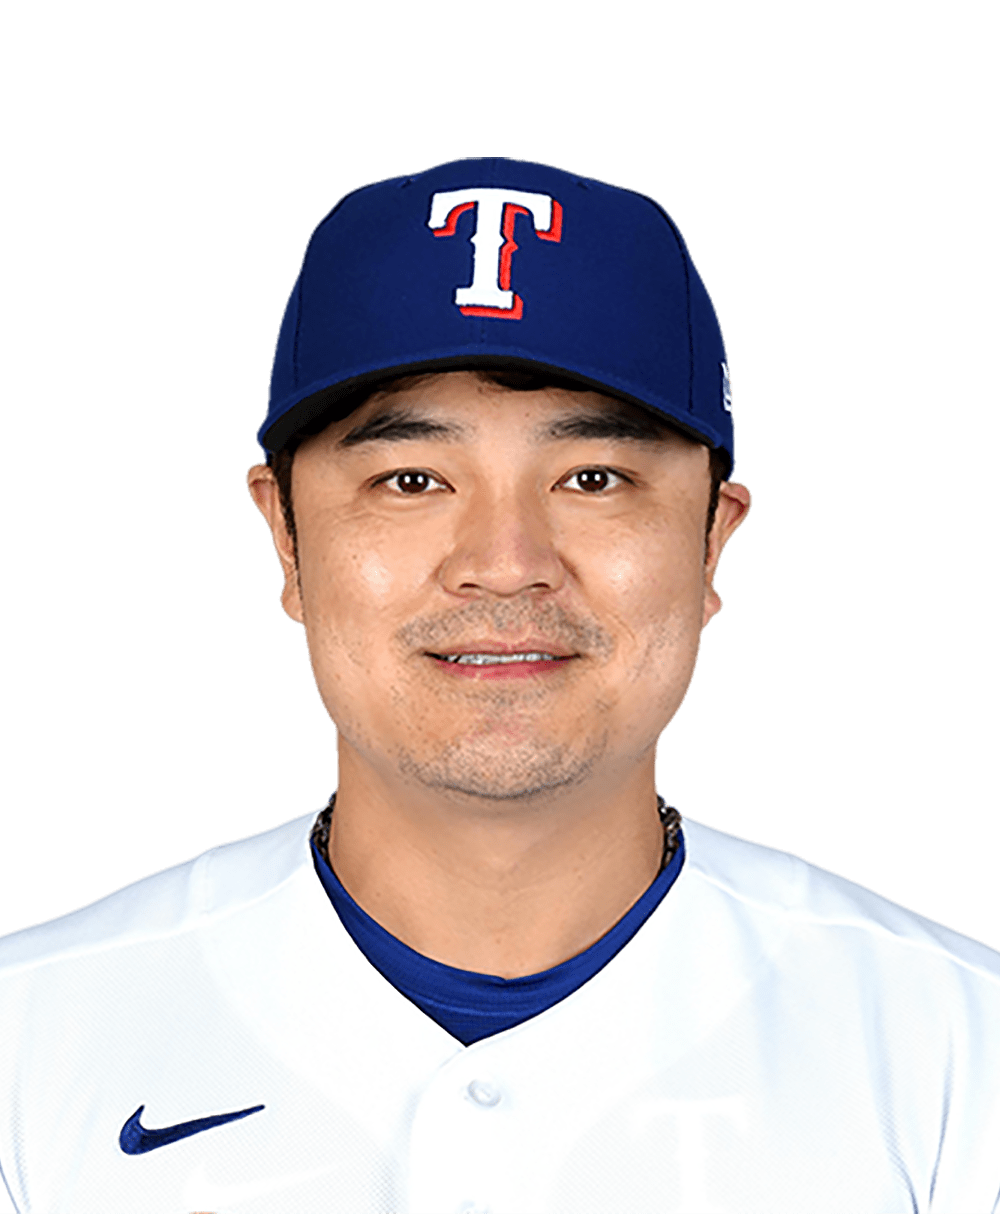 Shin-Soo Choo signs with the Texas Rangers